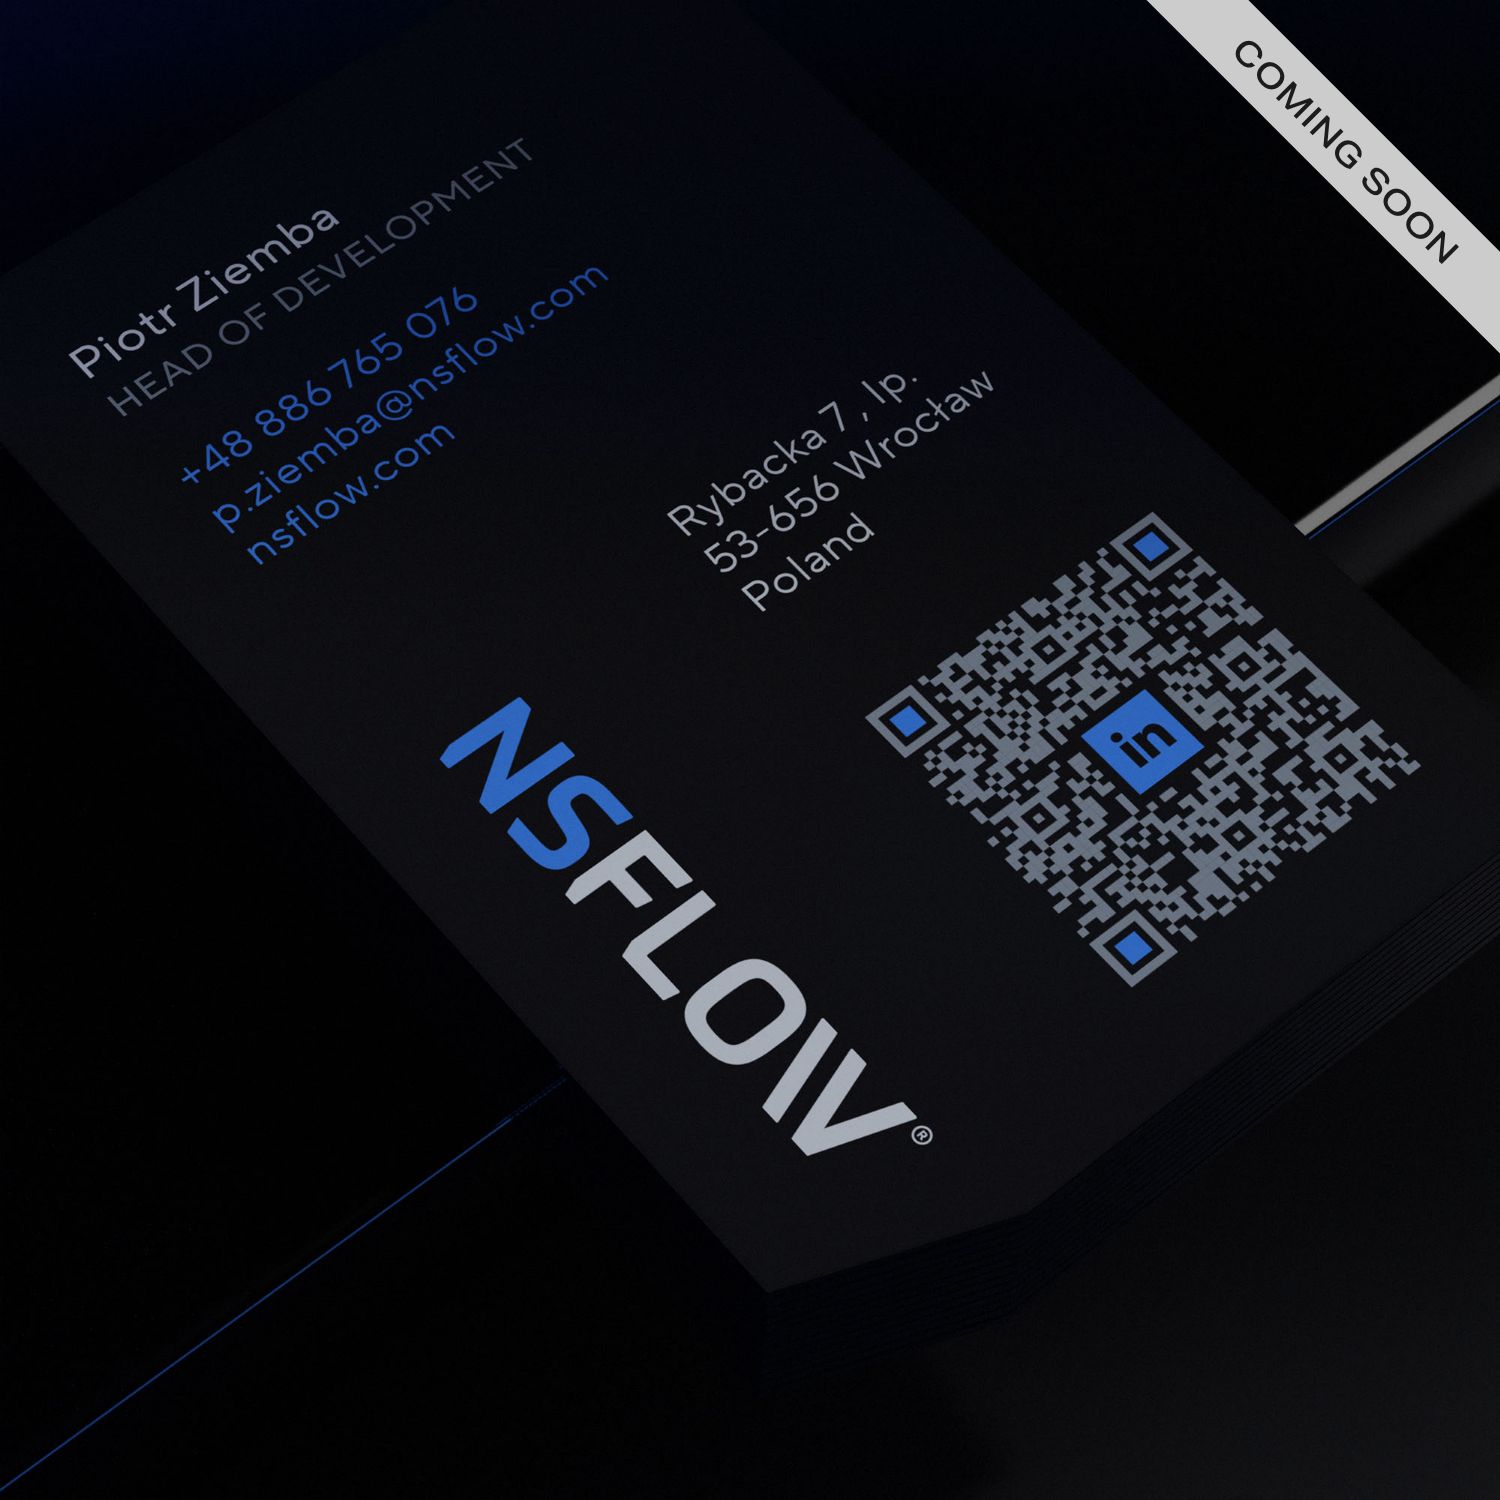 NSFLOW — An industrial AI & AR platform